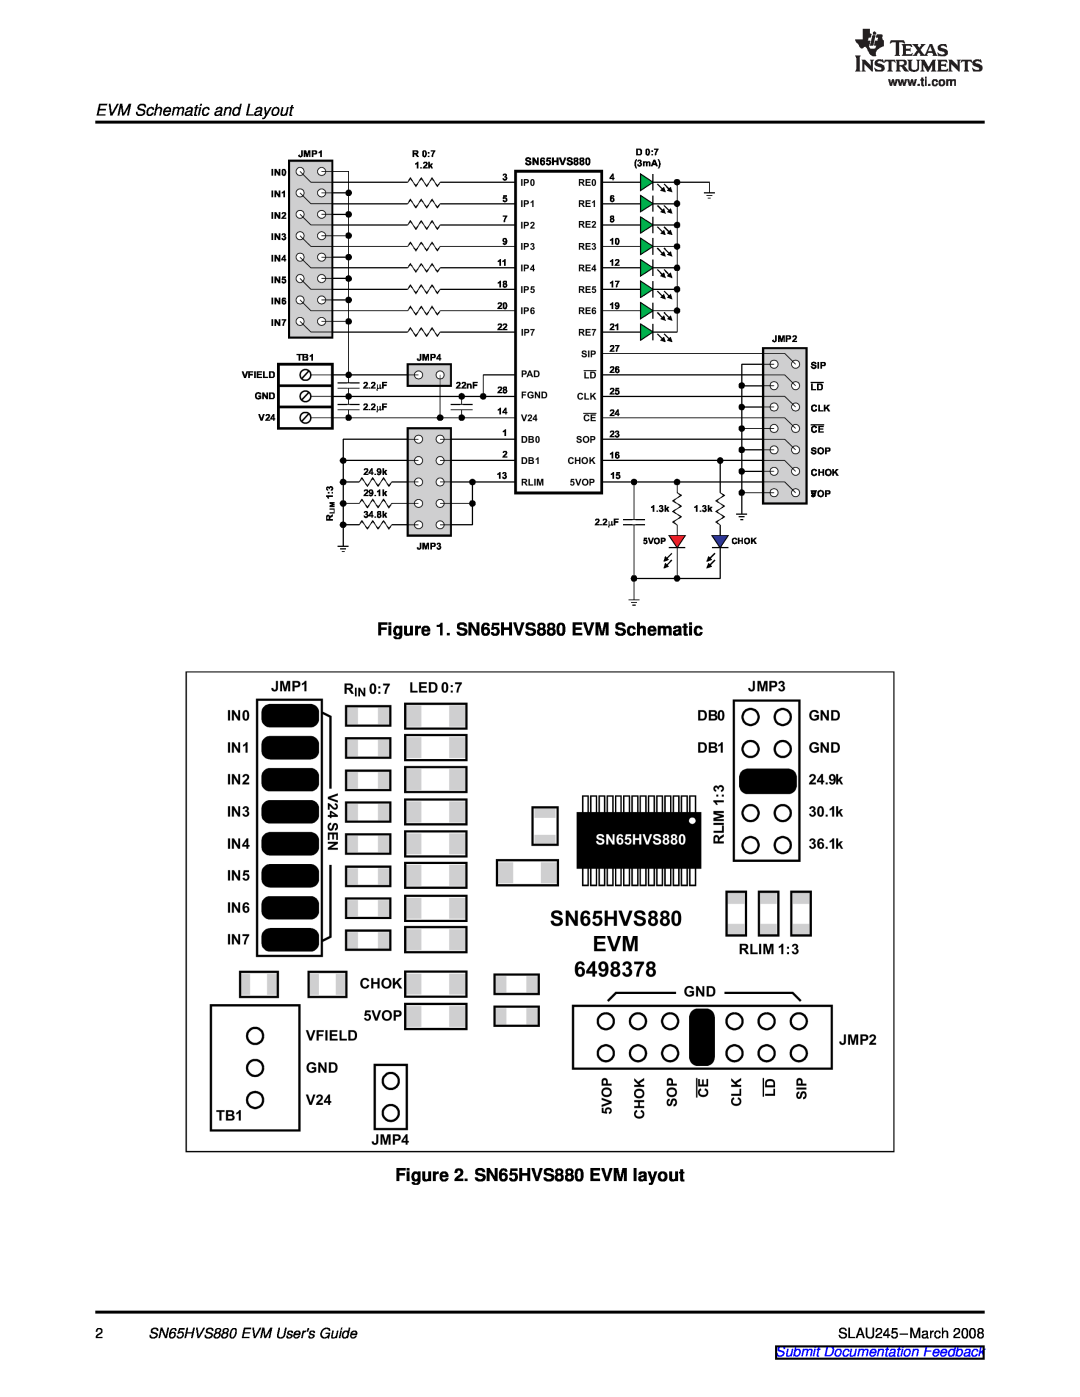 Texas Instruments SN65HVS880 EVM Schematic, SN65HVS880 EVM layout, EVM Schematic and Layout, SN65HVS880 EVM Users Guide 